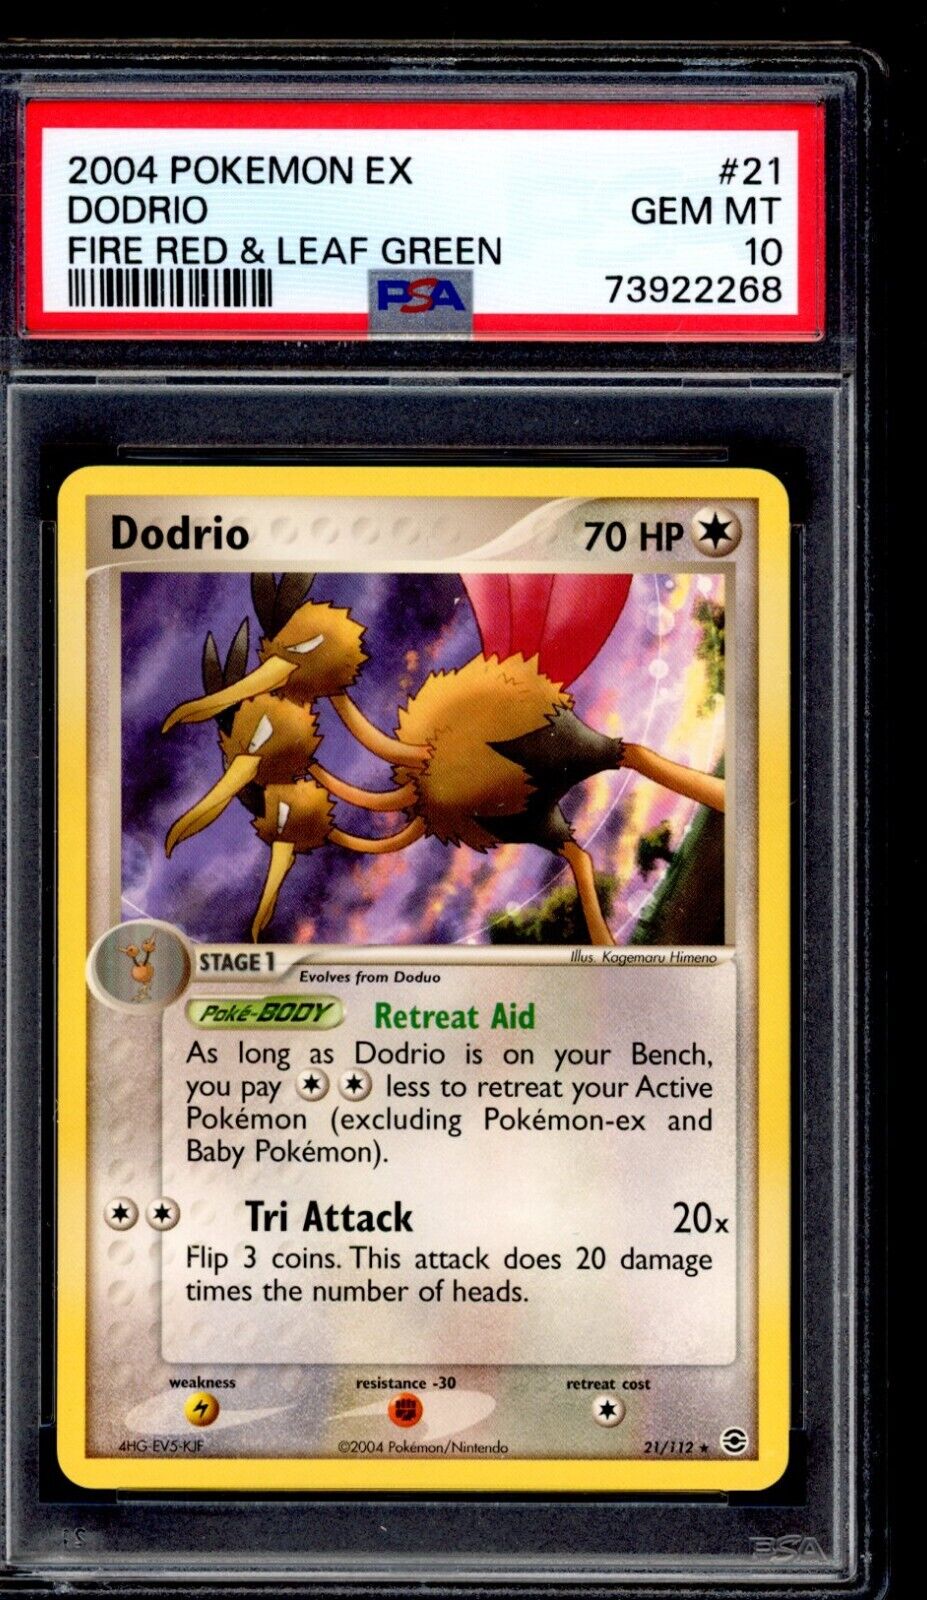 PSA 10 Dodrio 2004 Pokemon Card 21/112 EX Fire Red & Leaf Green